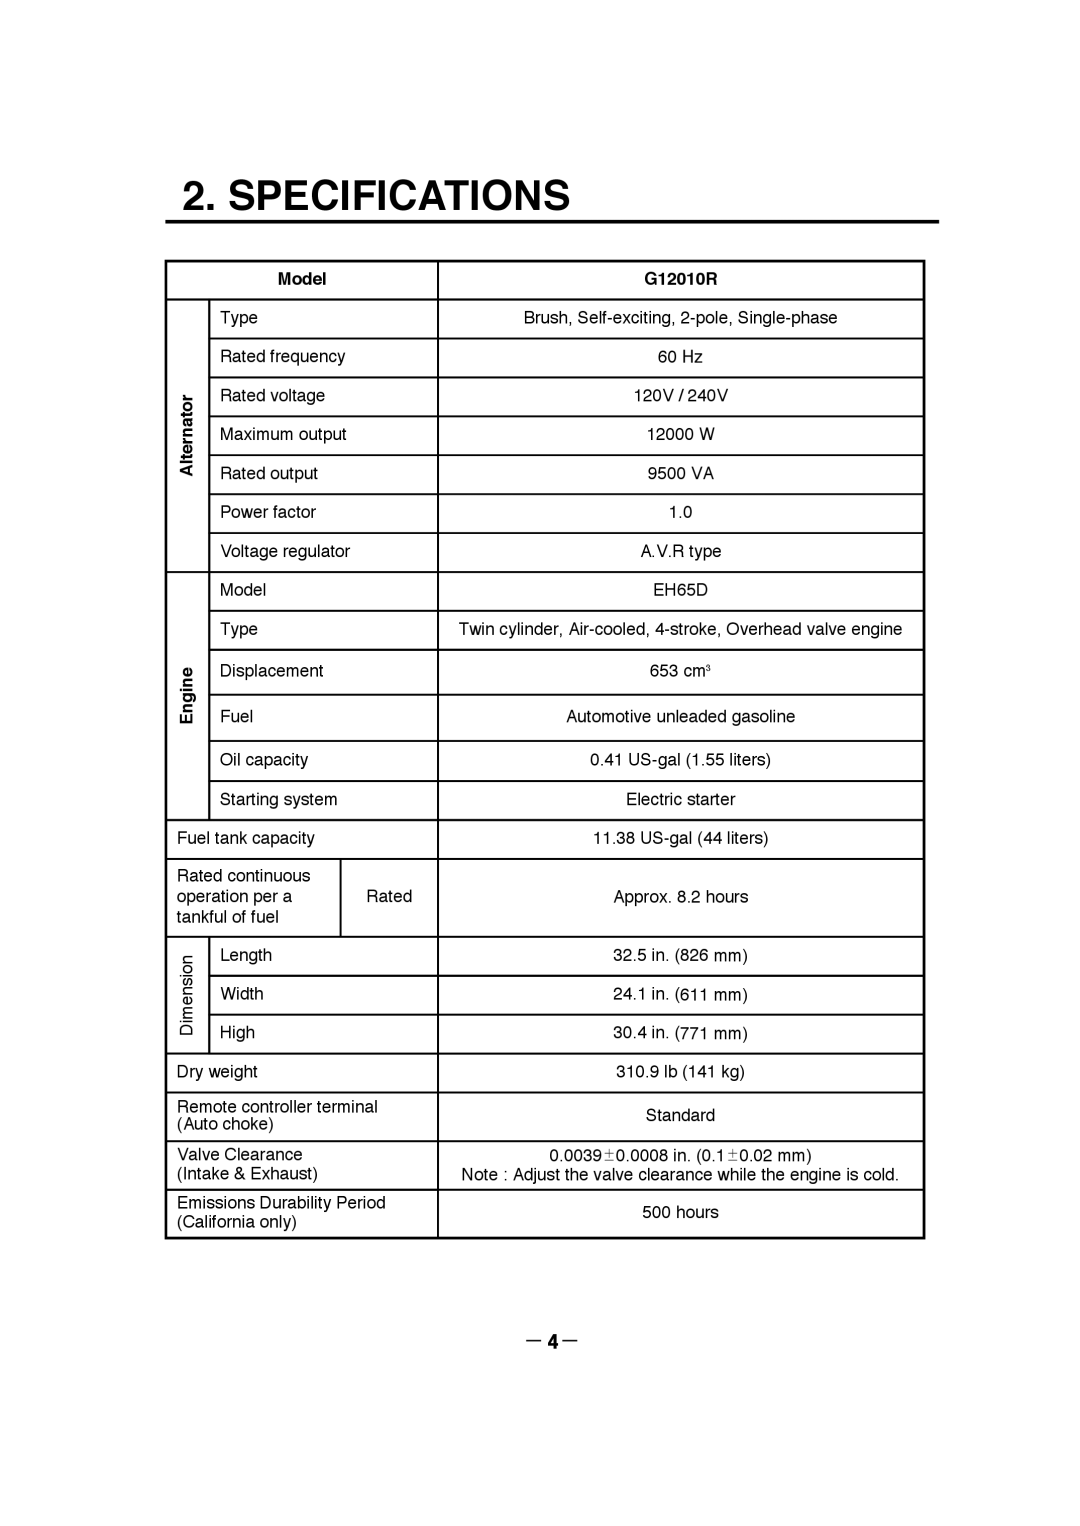 Makita G12010R manual Specifications, － 4－, Model, Engine 